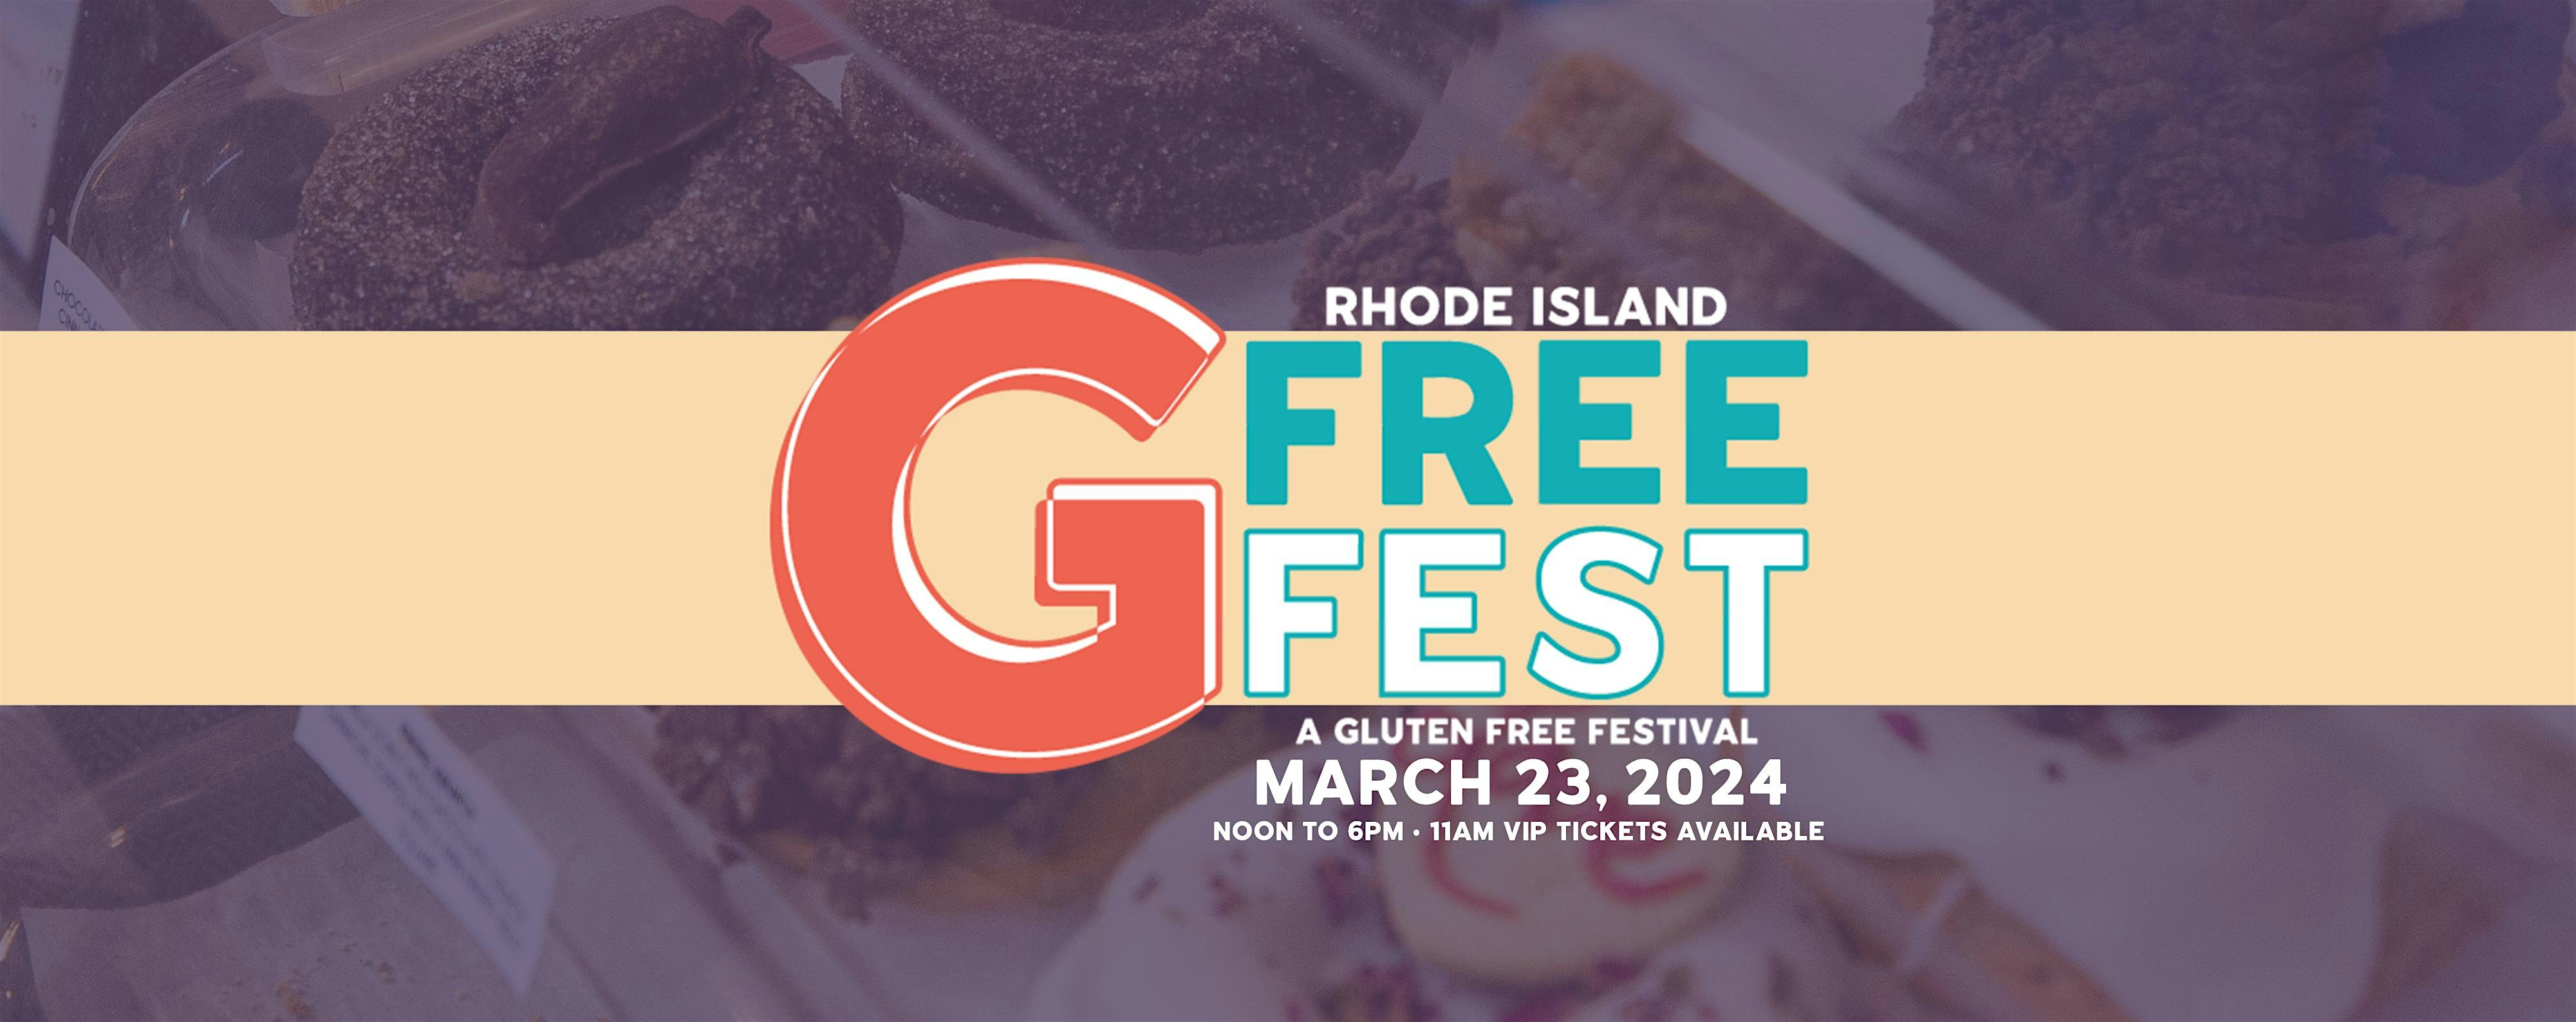 GFree Fest - RI's Gluten Free Festival